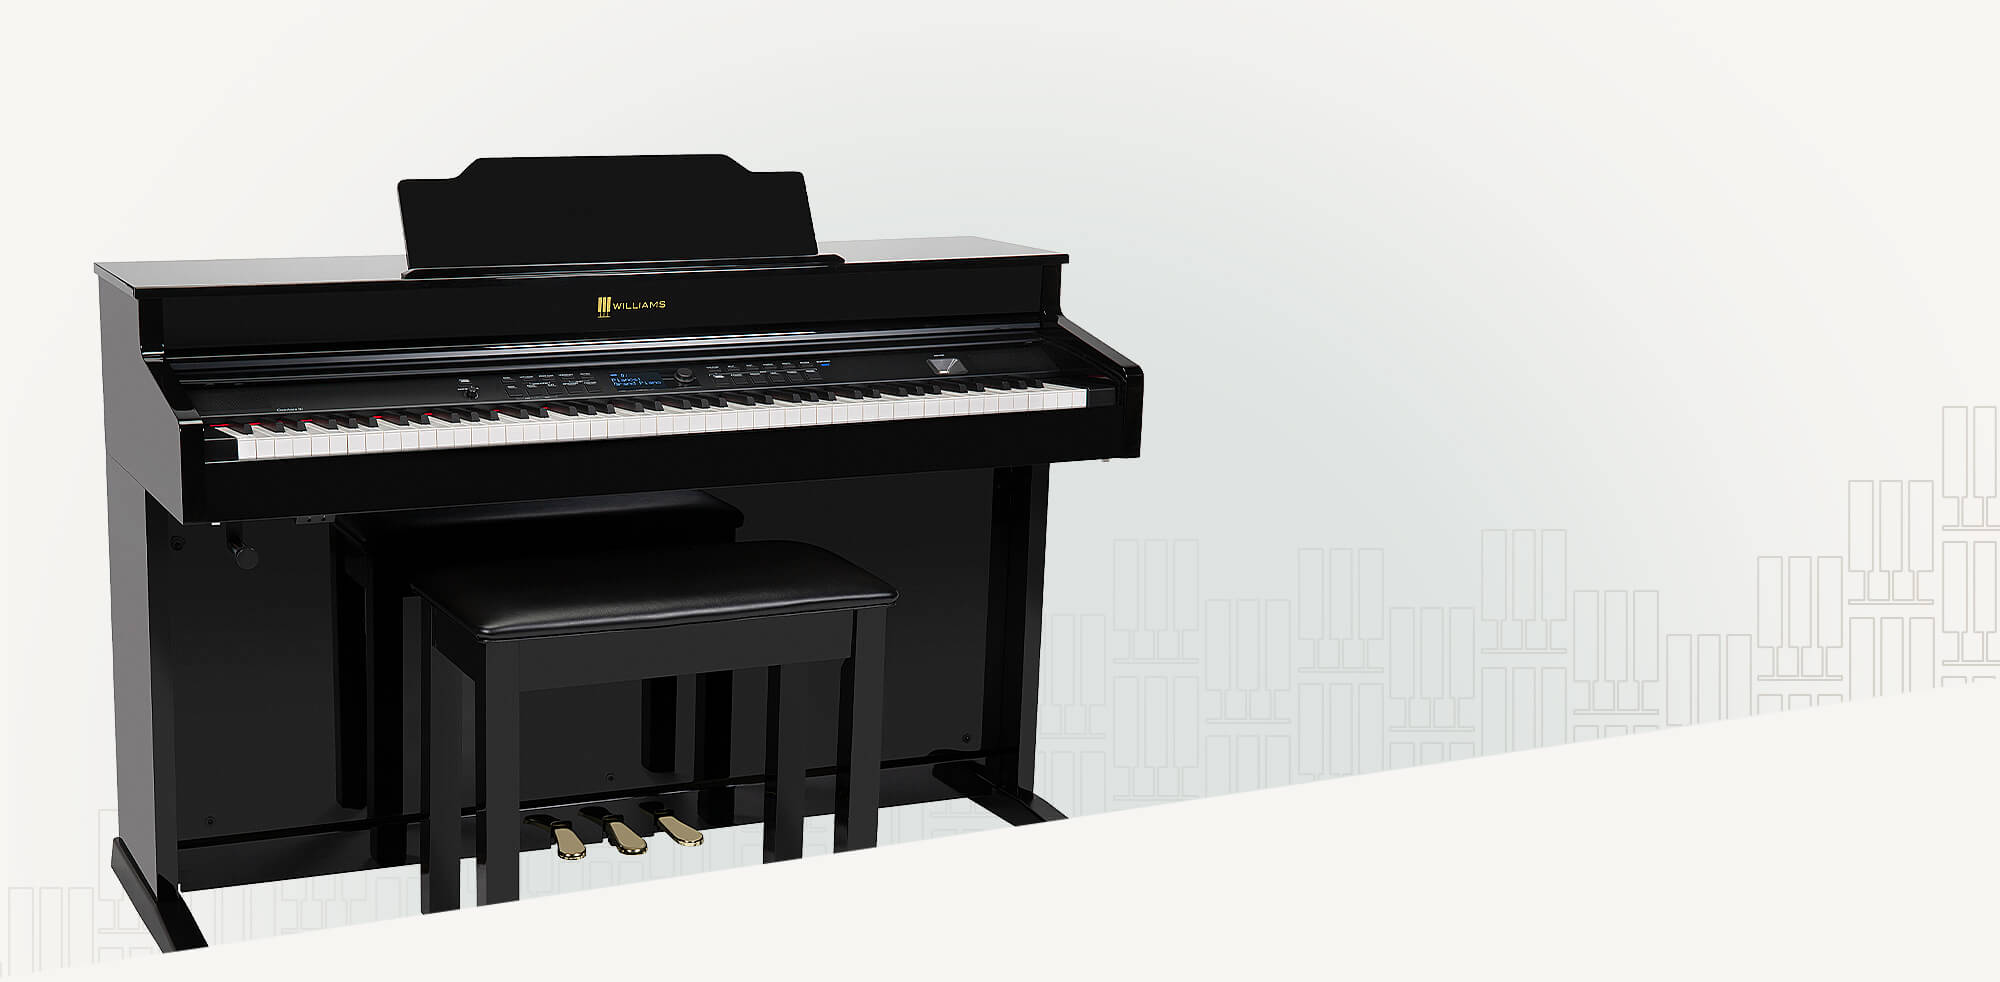 Williams Overture III digital console piano.